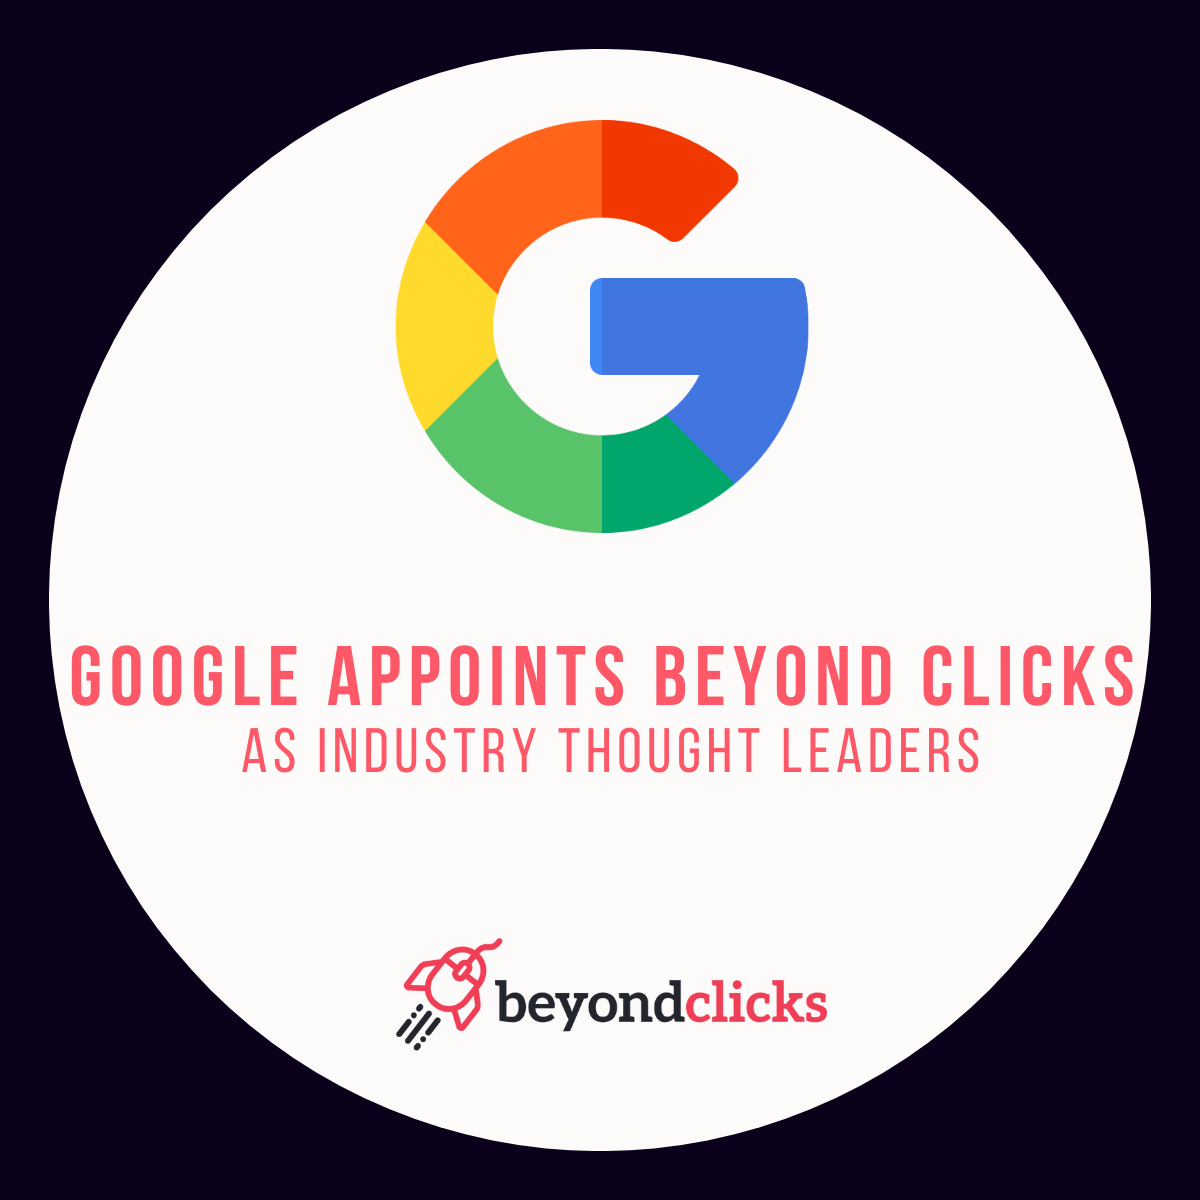 Google Appoints Beyond Clicks